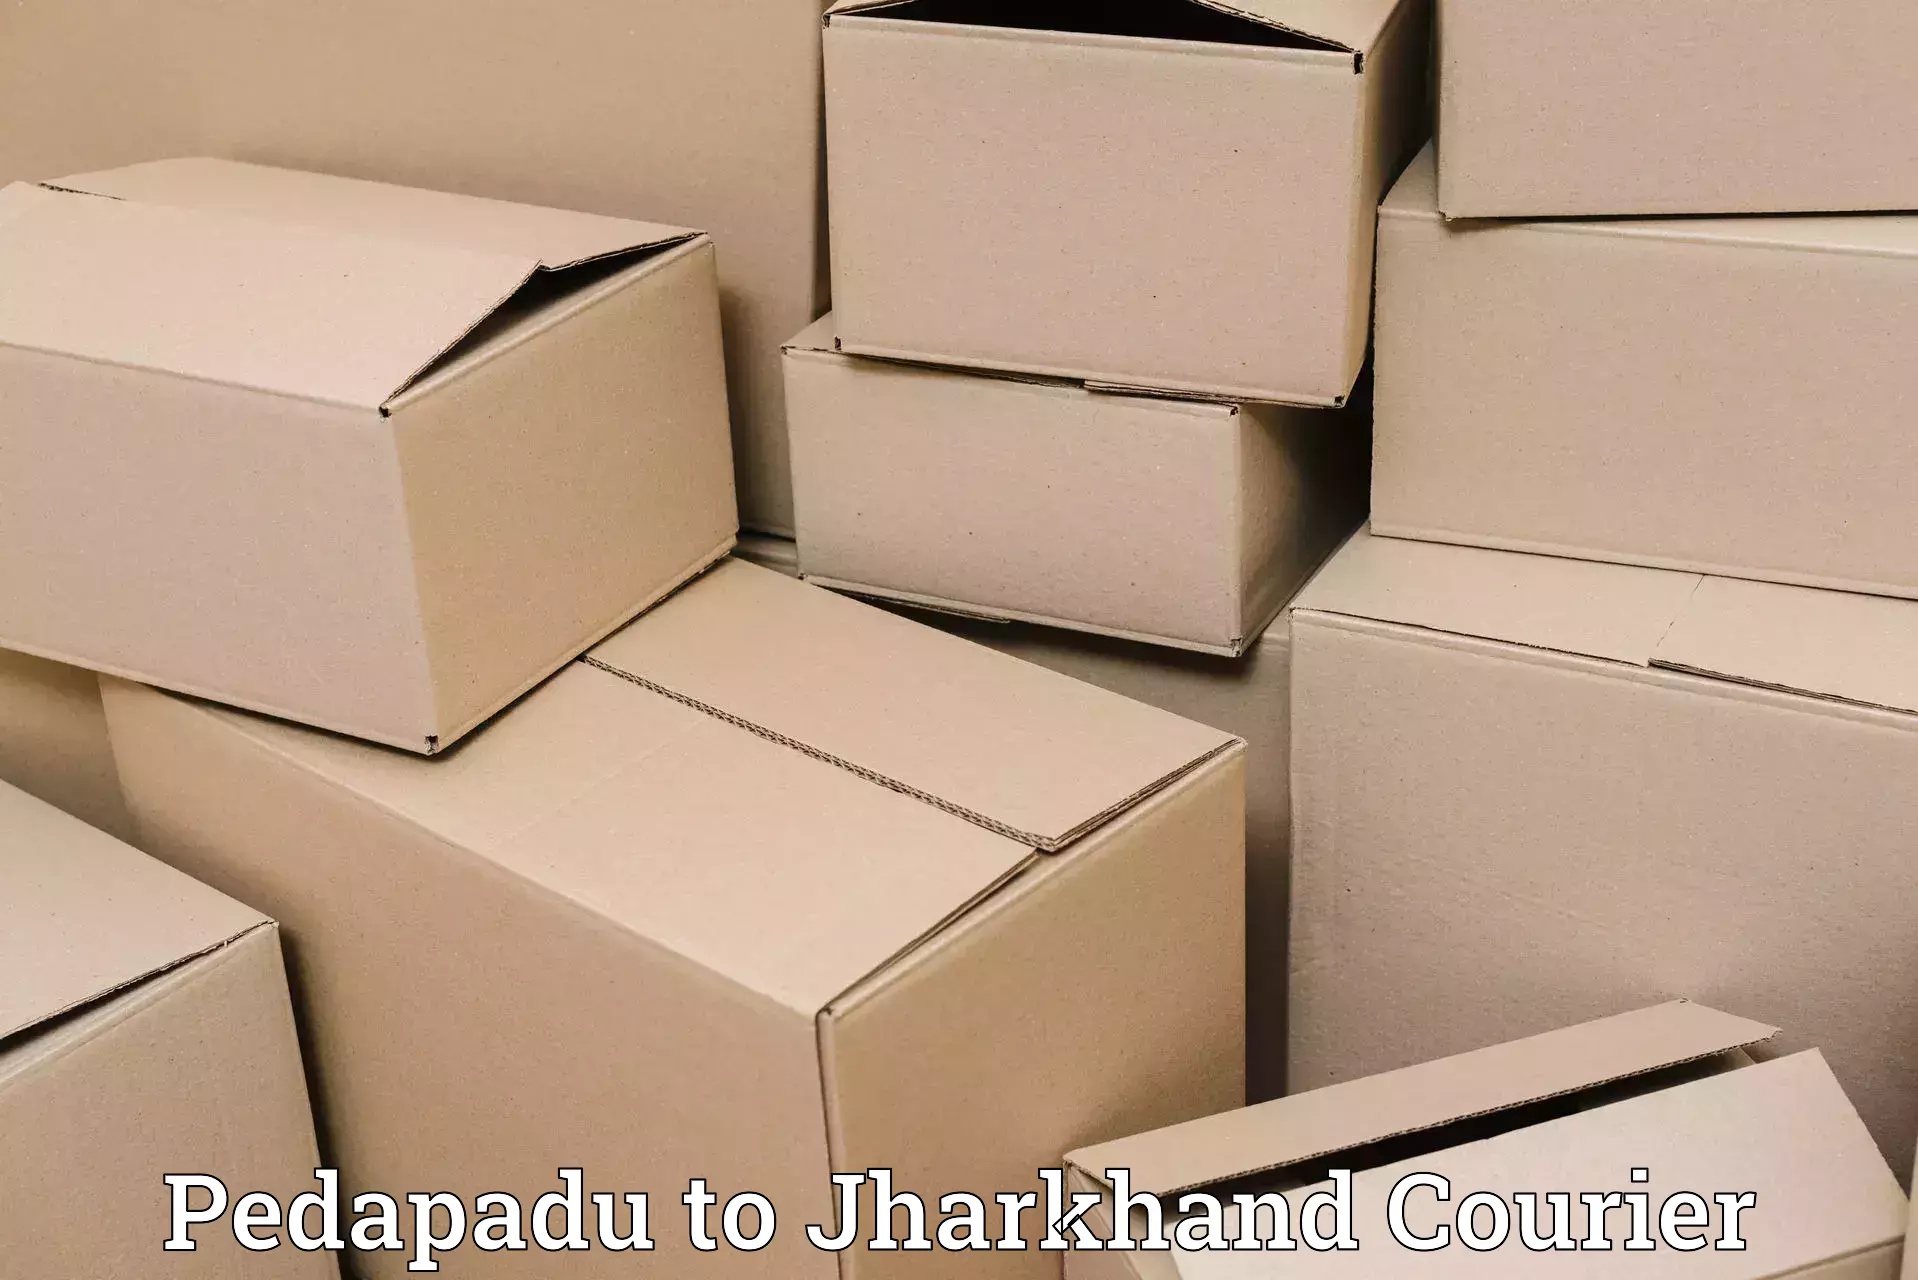 Courier dispatch services Pedapadu to Chatra